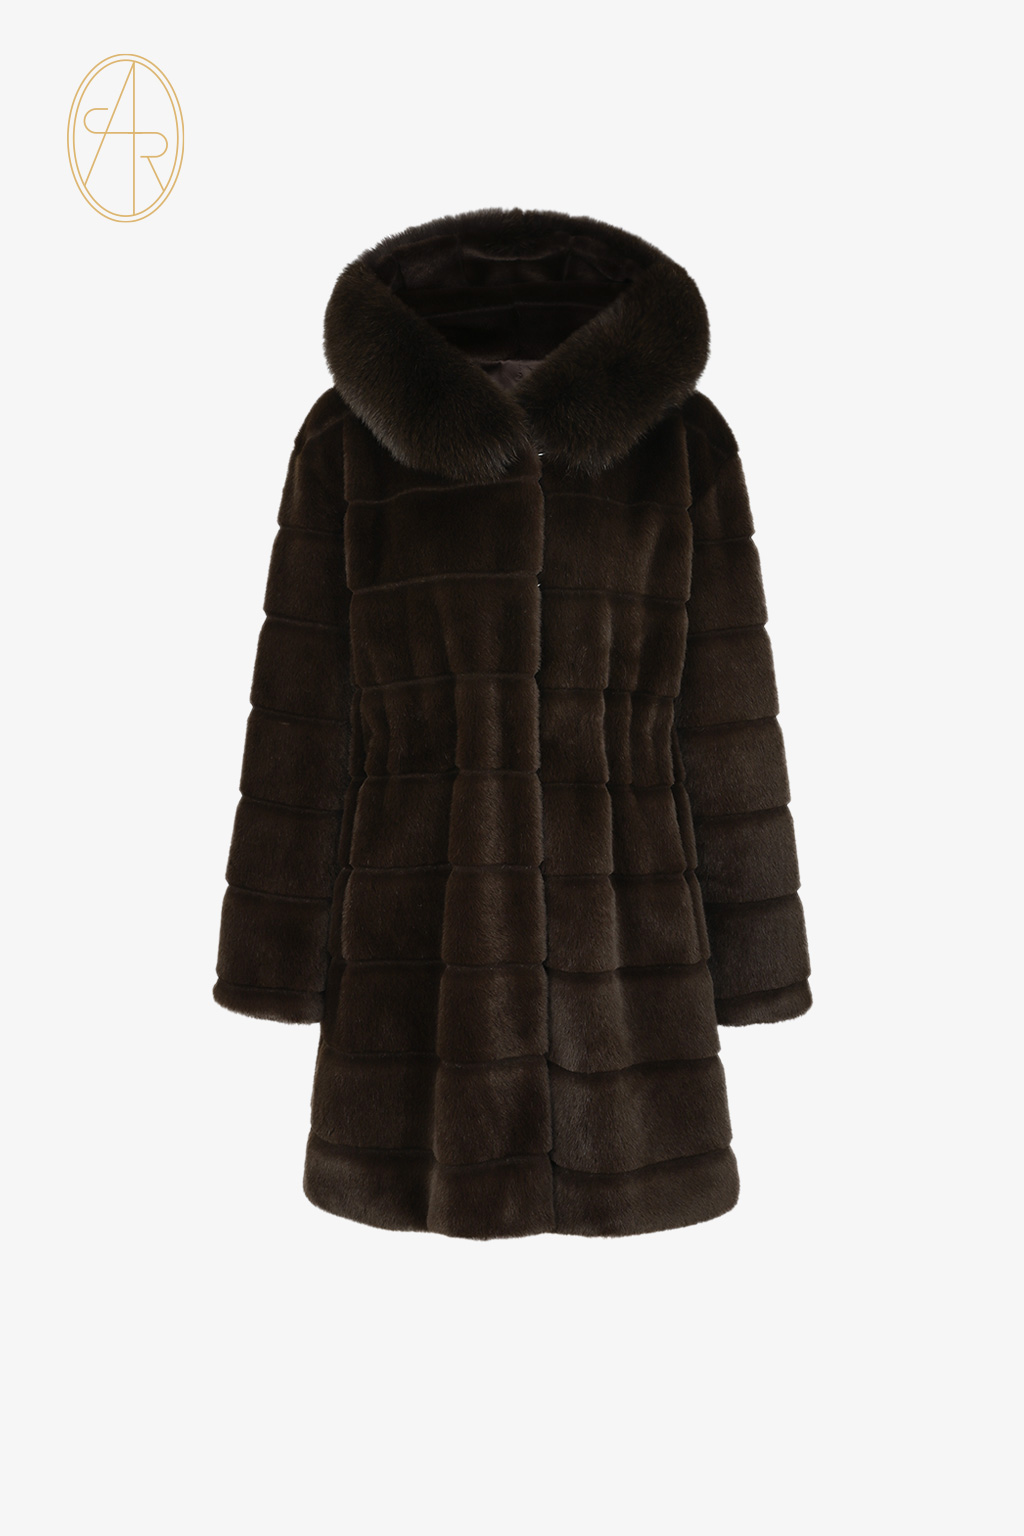 [exclusive] della fur coat